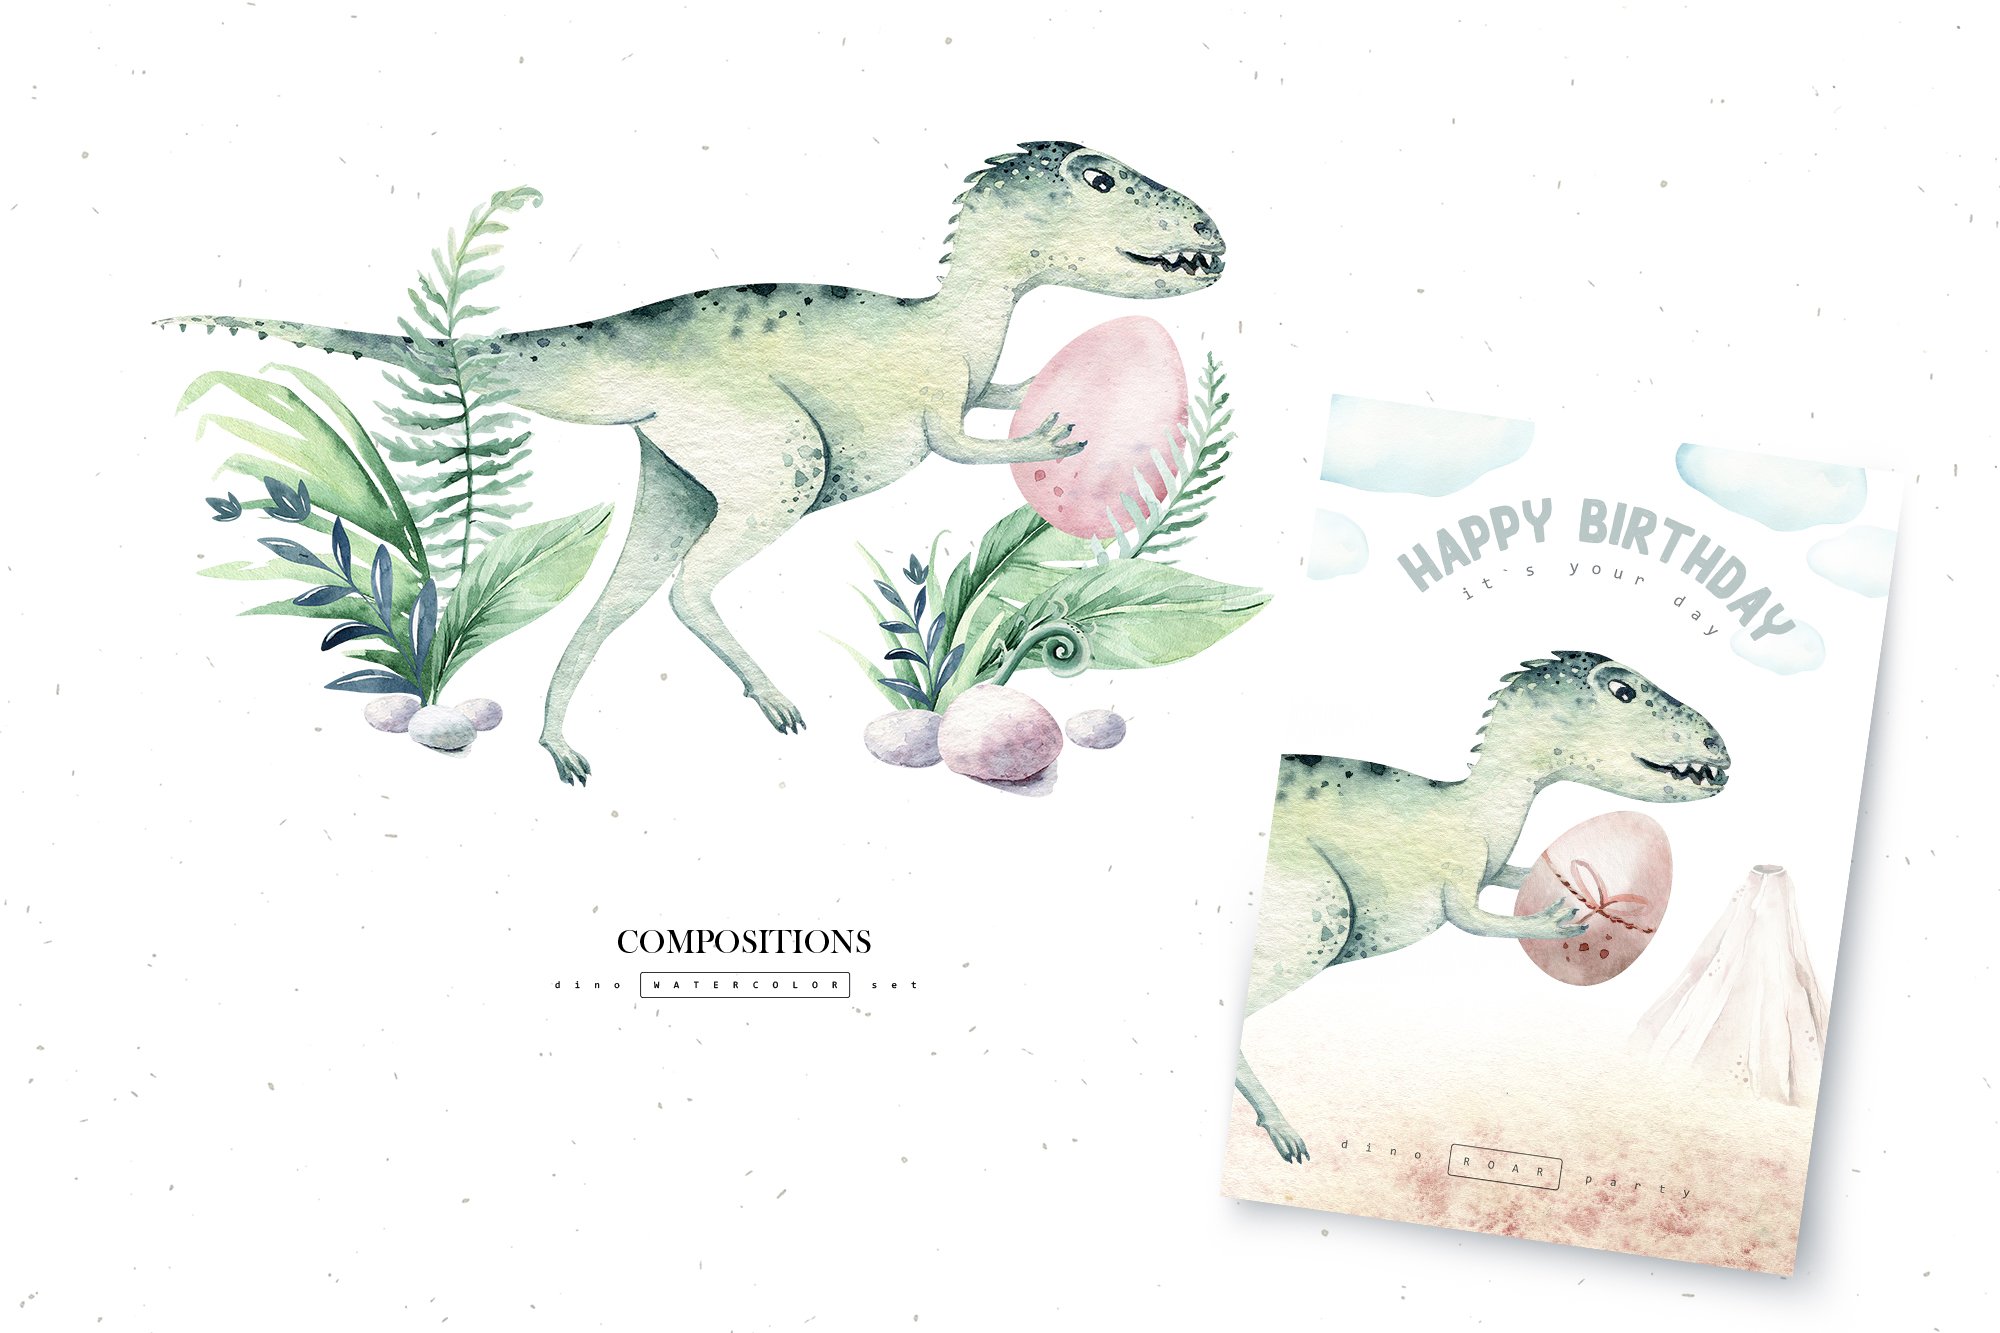 Dino Watercolor Collection - Dinosaur Set Part II